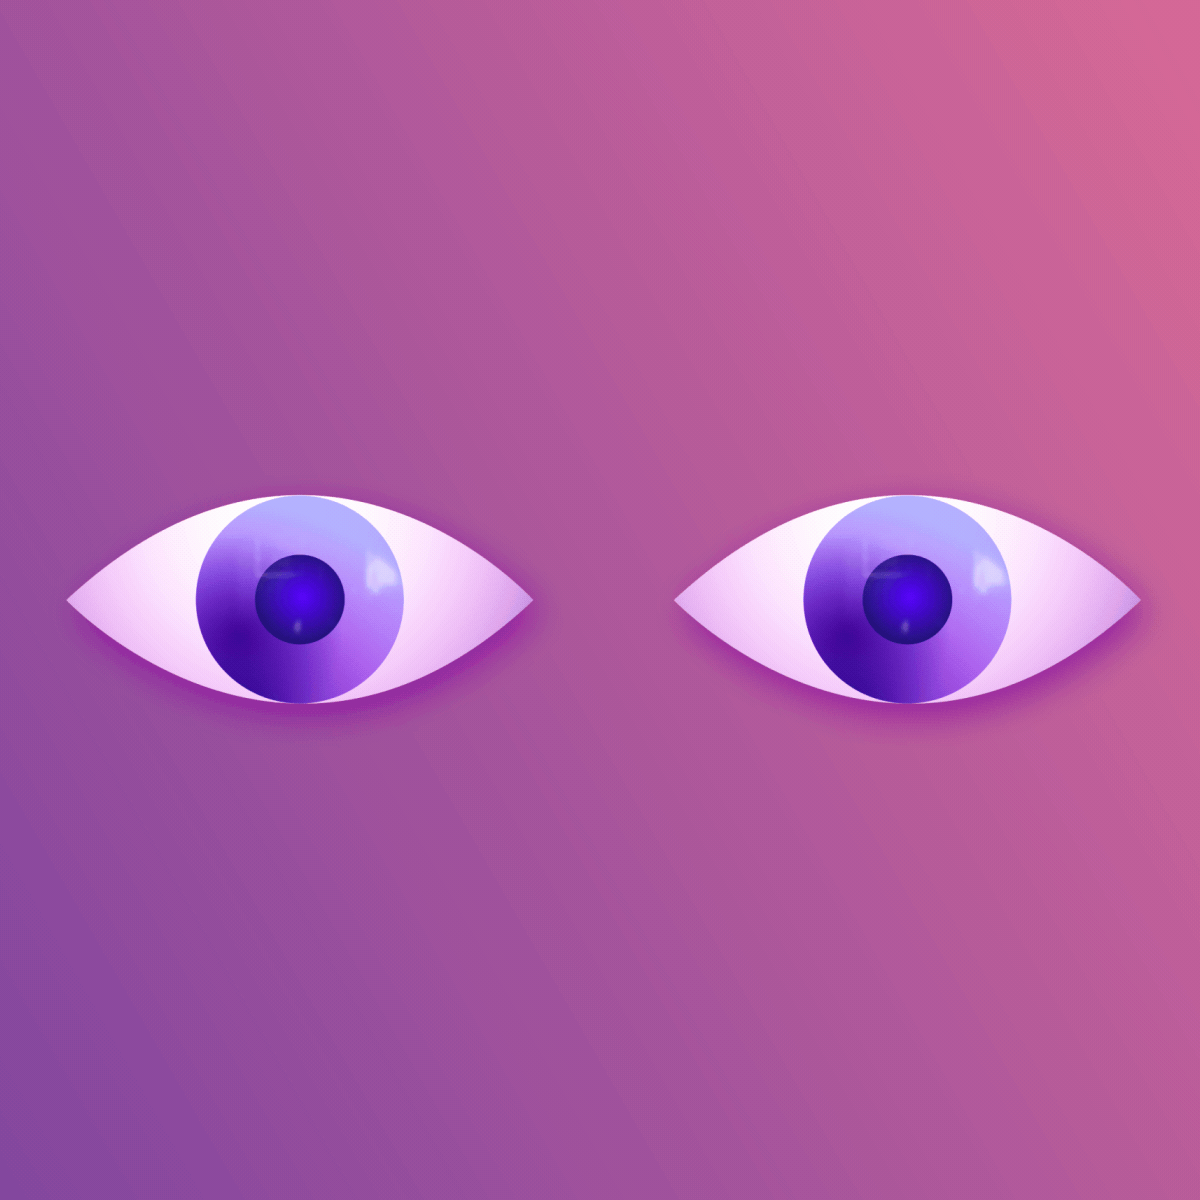 <O> <O> 2danimation animation characteranimation characterdesign eye eyeball eyeballs eyes illustration motion graphics